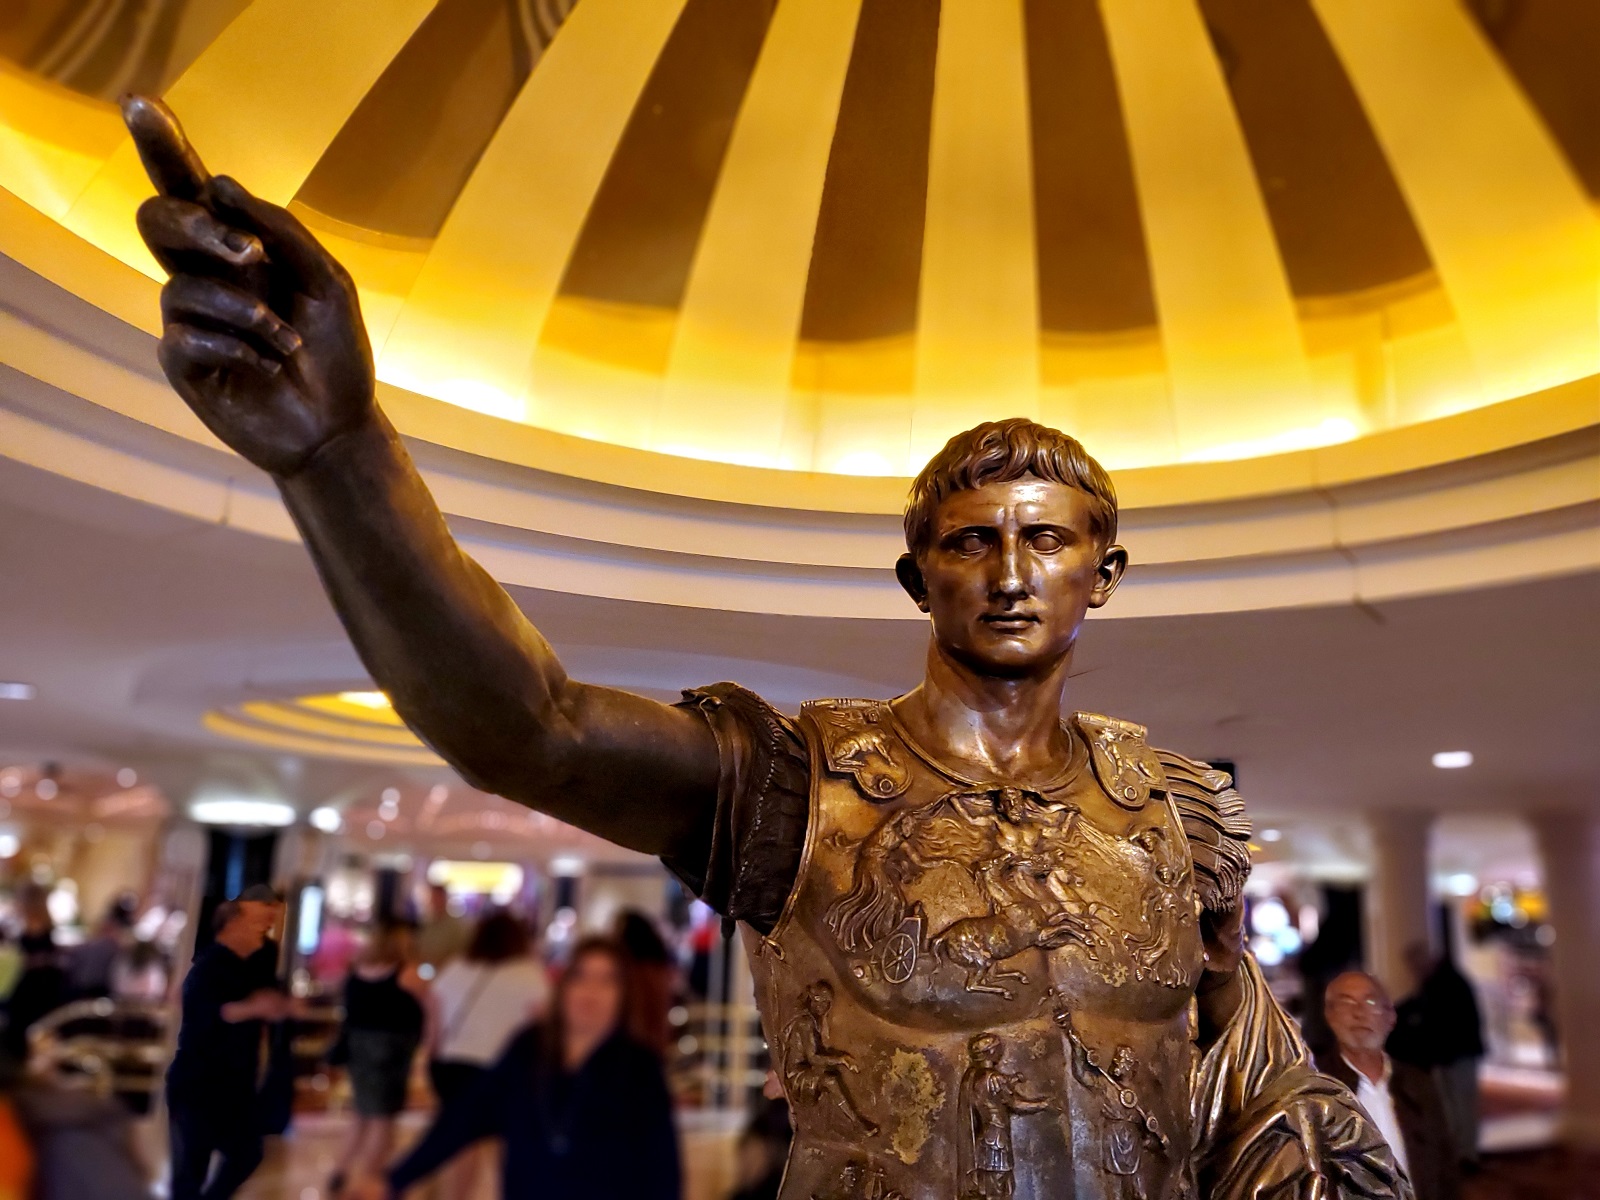 Founderscard Extends Partnership With Caesars Rewards